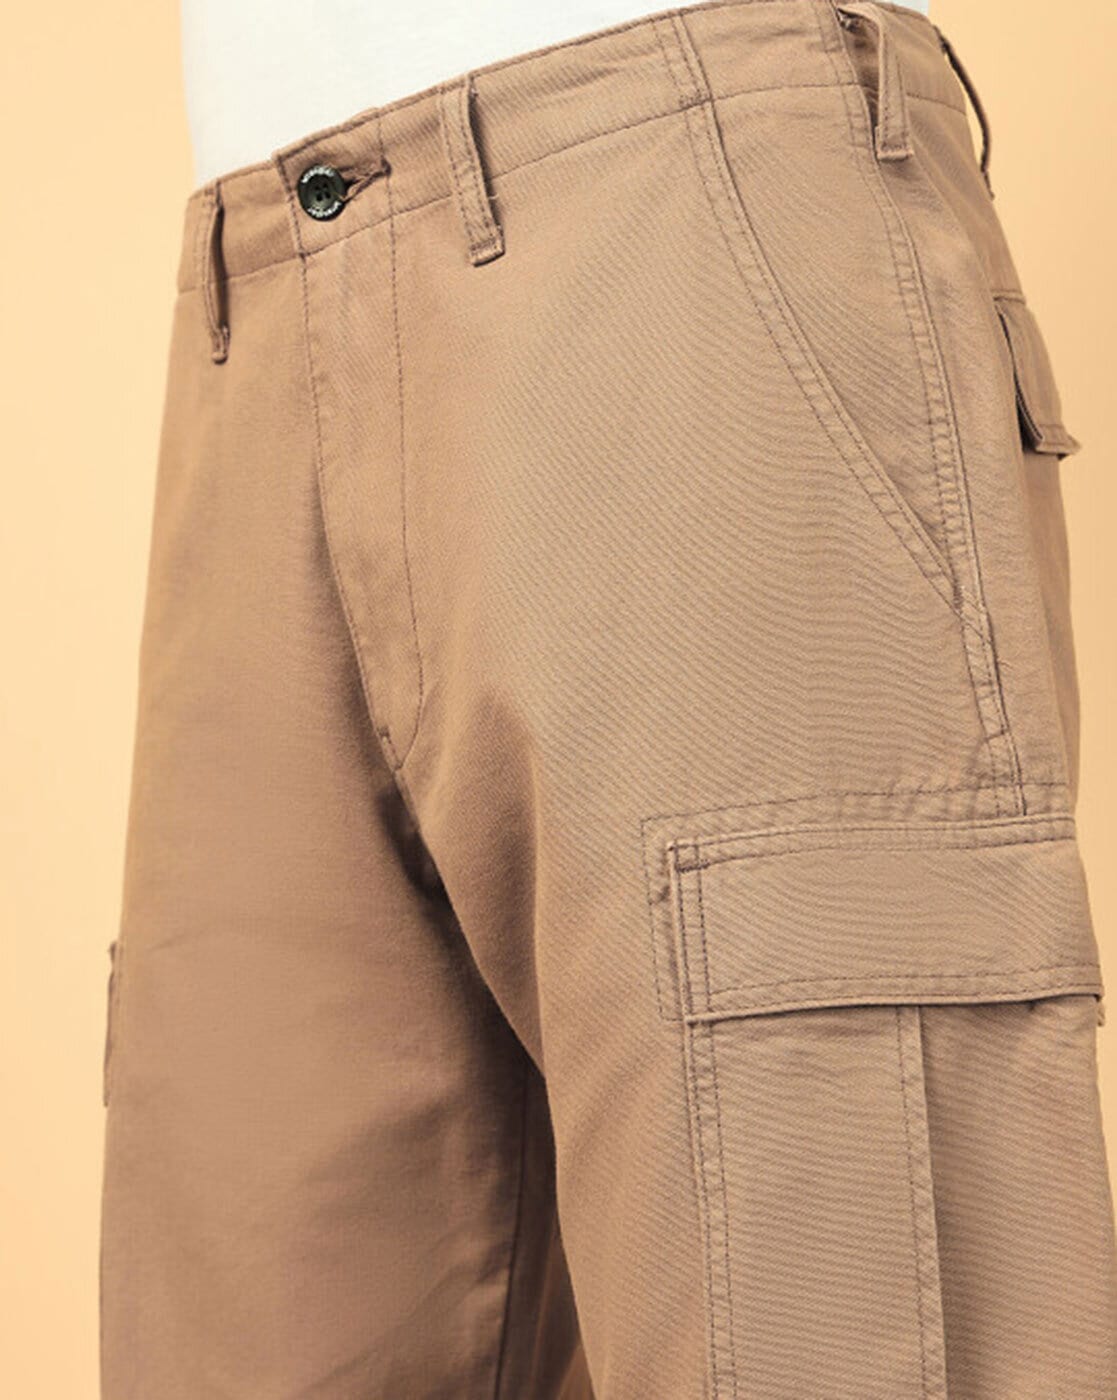 Men's Wrangler® 20X® Active Flex Relaxed Fit Jean